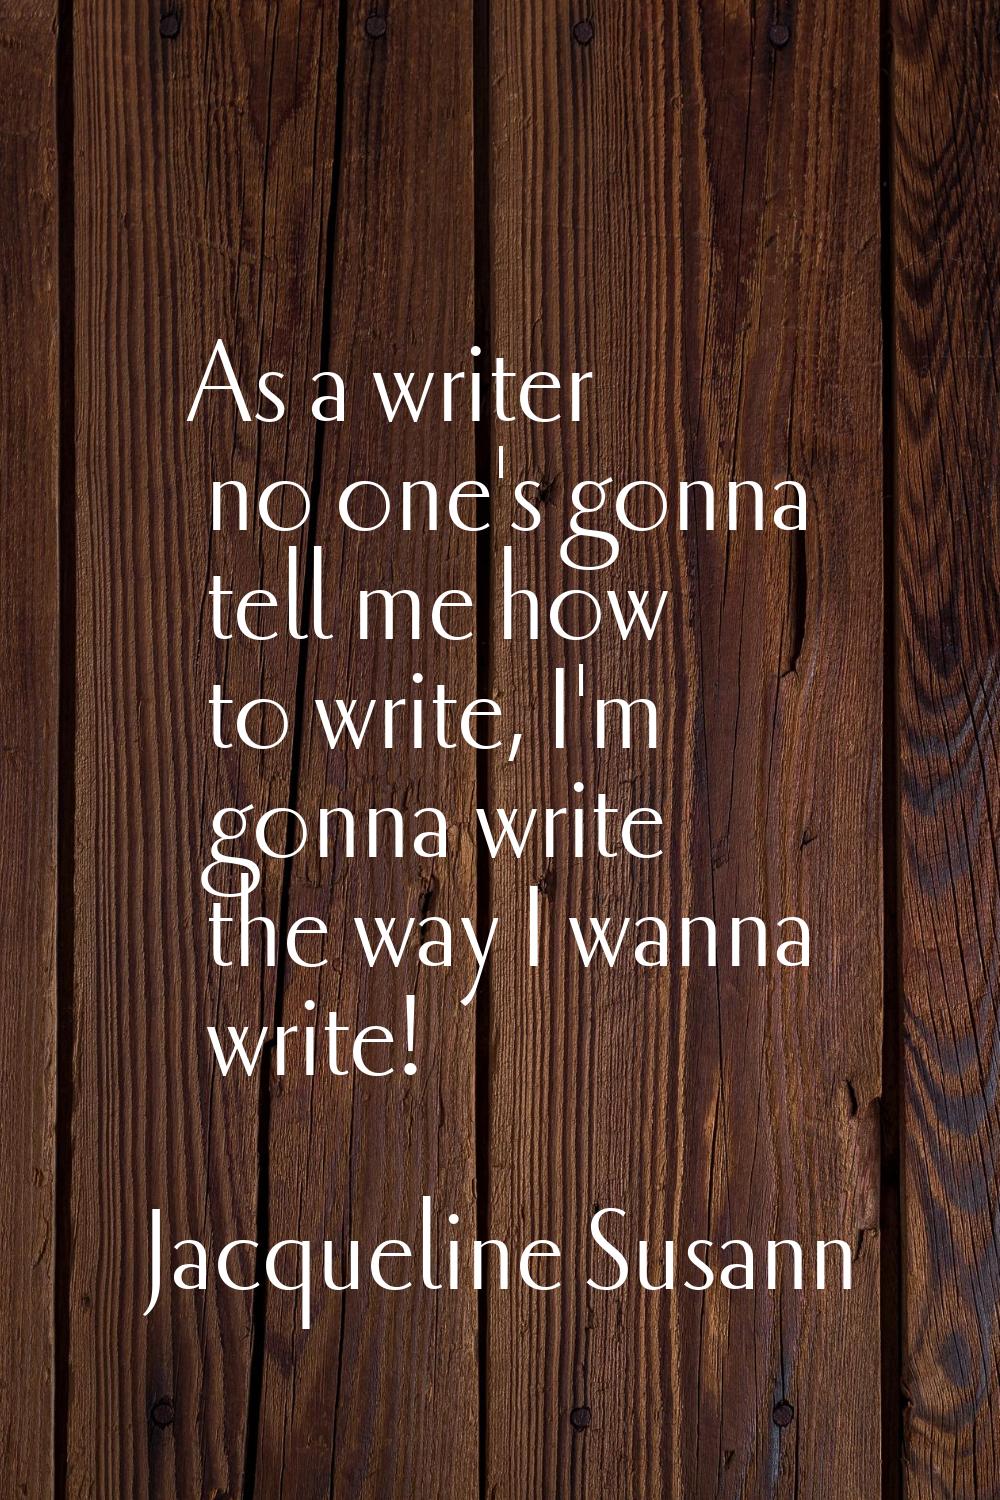 As a writer no one's gonna tell me how to write, I'm gonna write the way I wanna write!